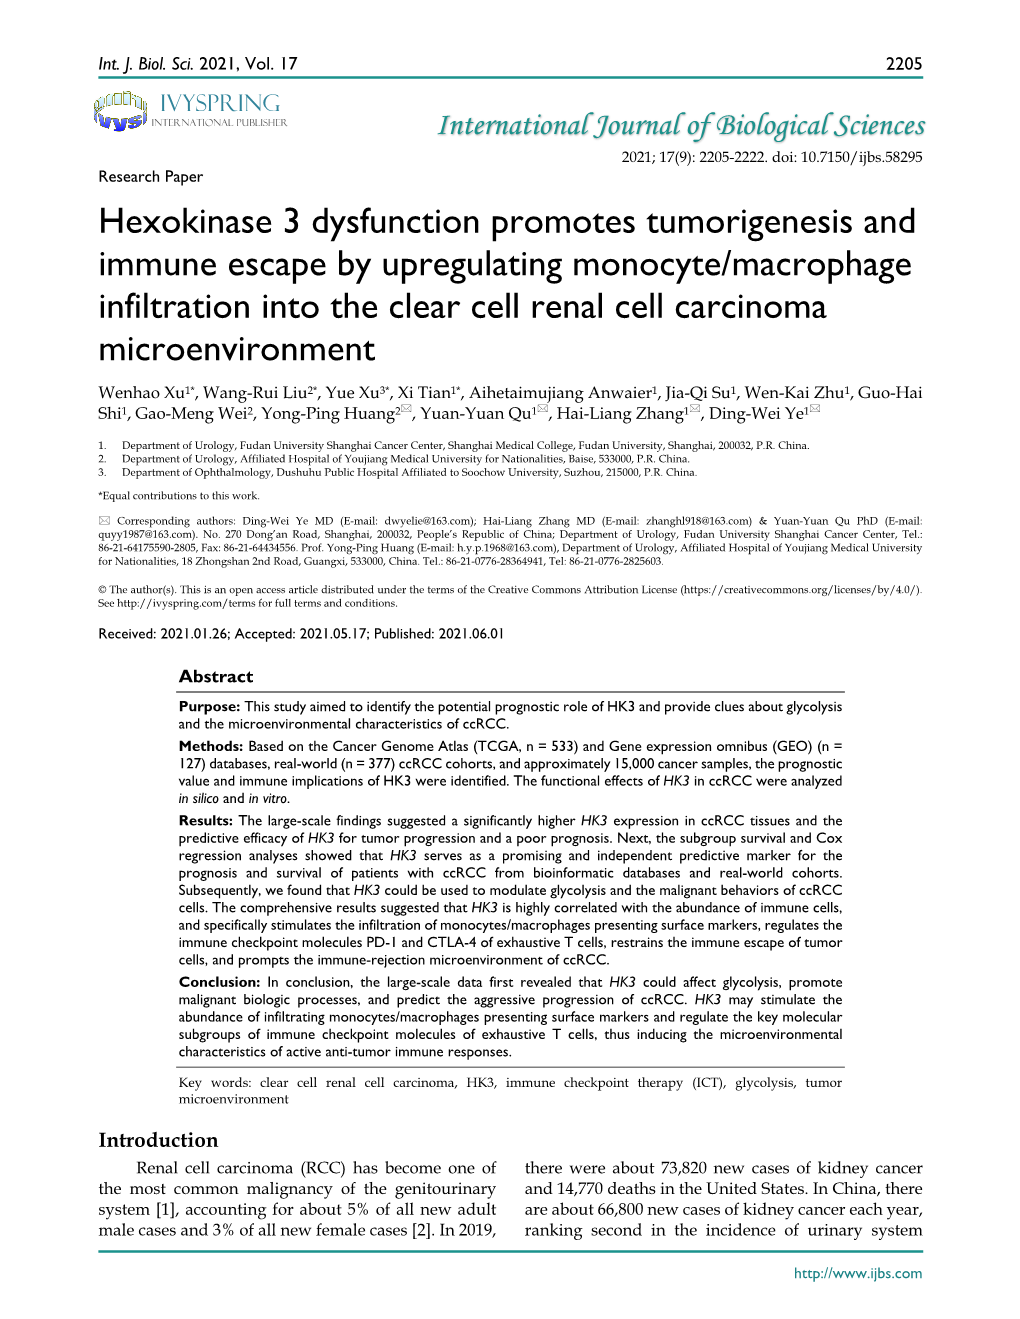 Hexokinase 3 Dysfunction Promotes Tumorigenesis and Immune Escape